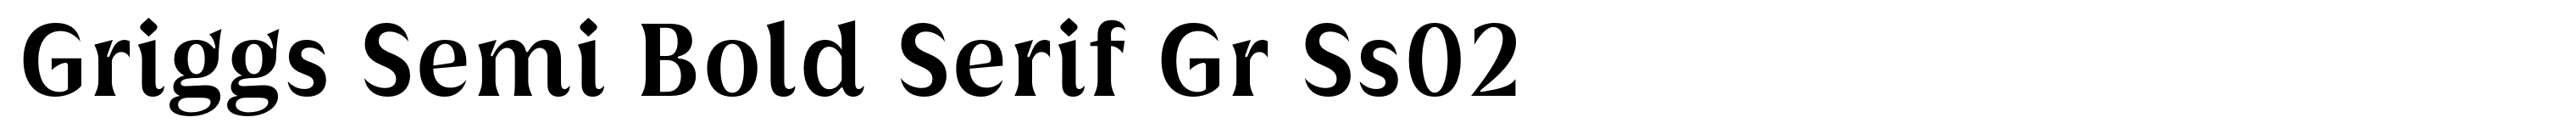 Griggs Semi Bold Serif Gr Ss02